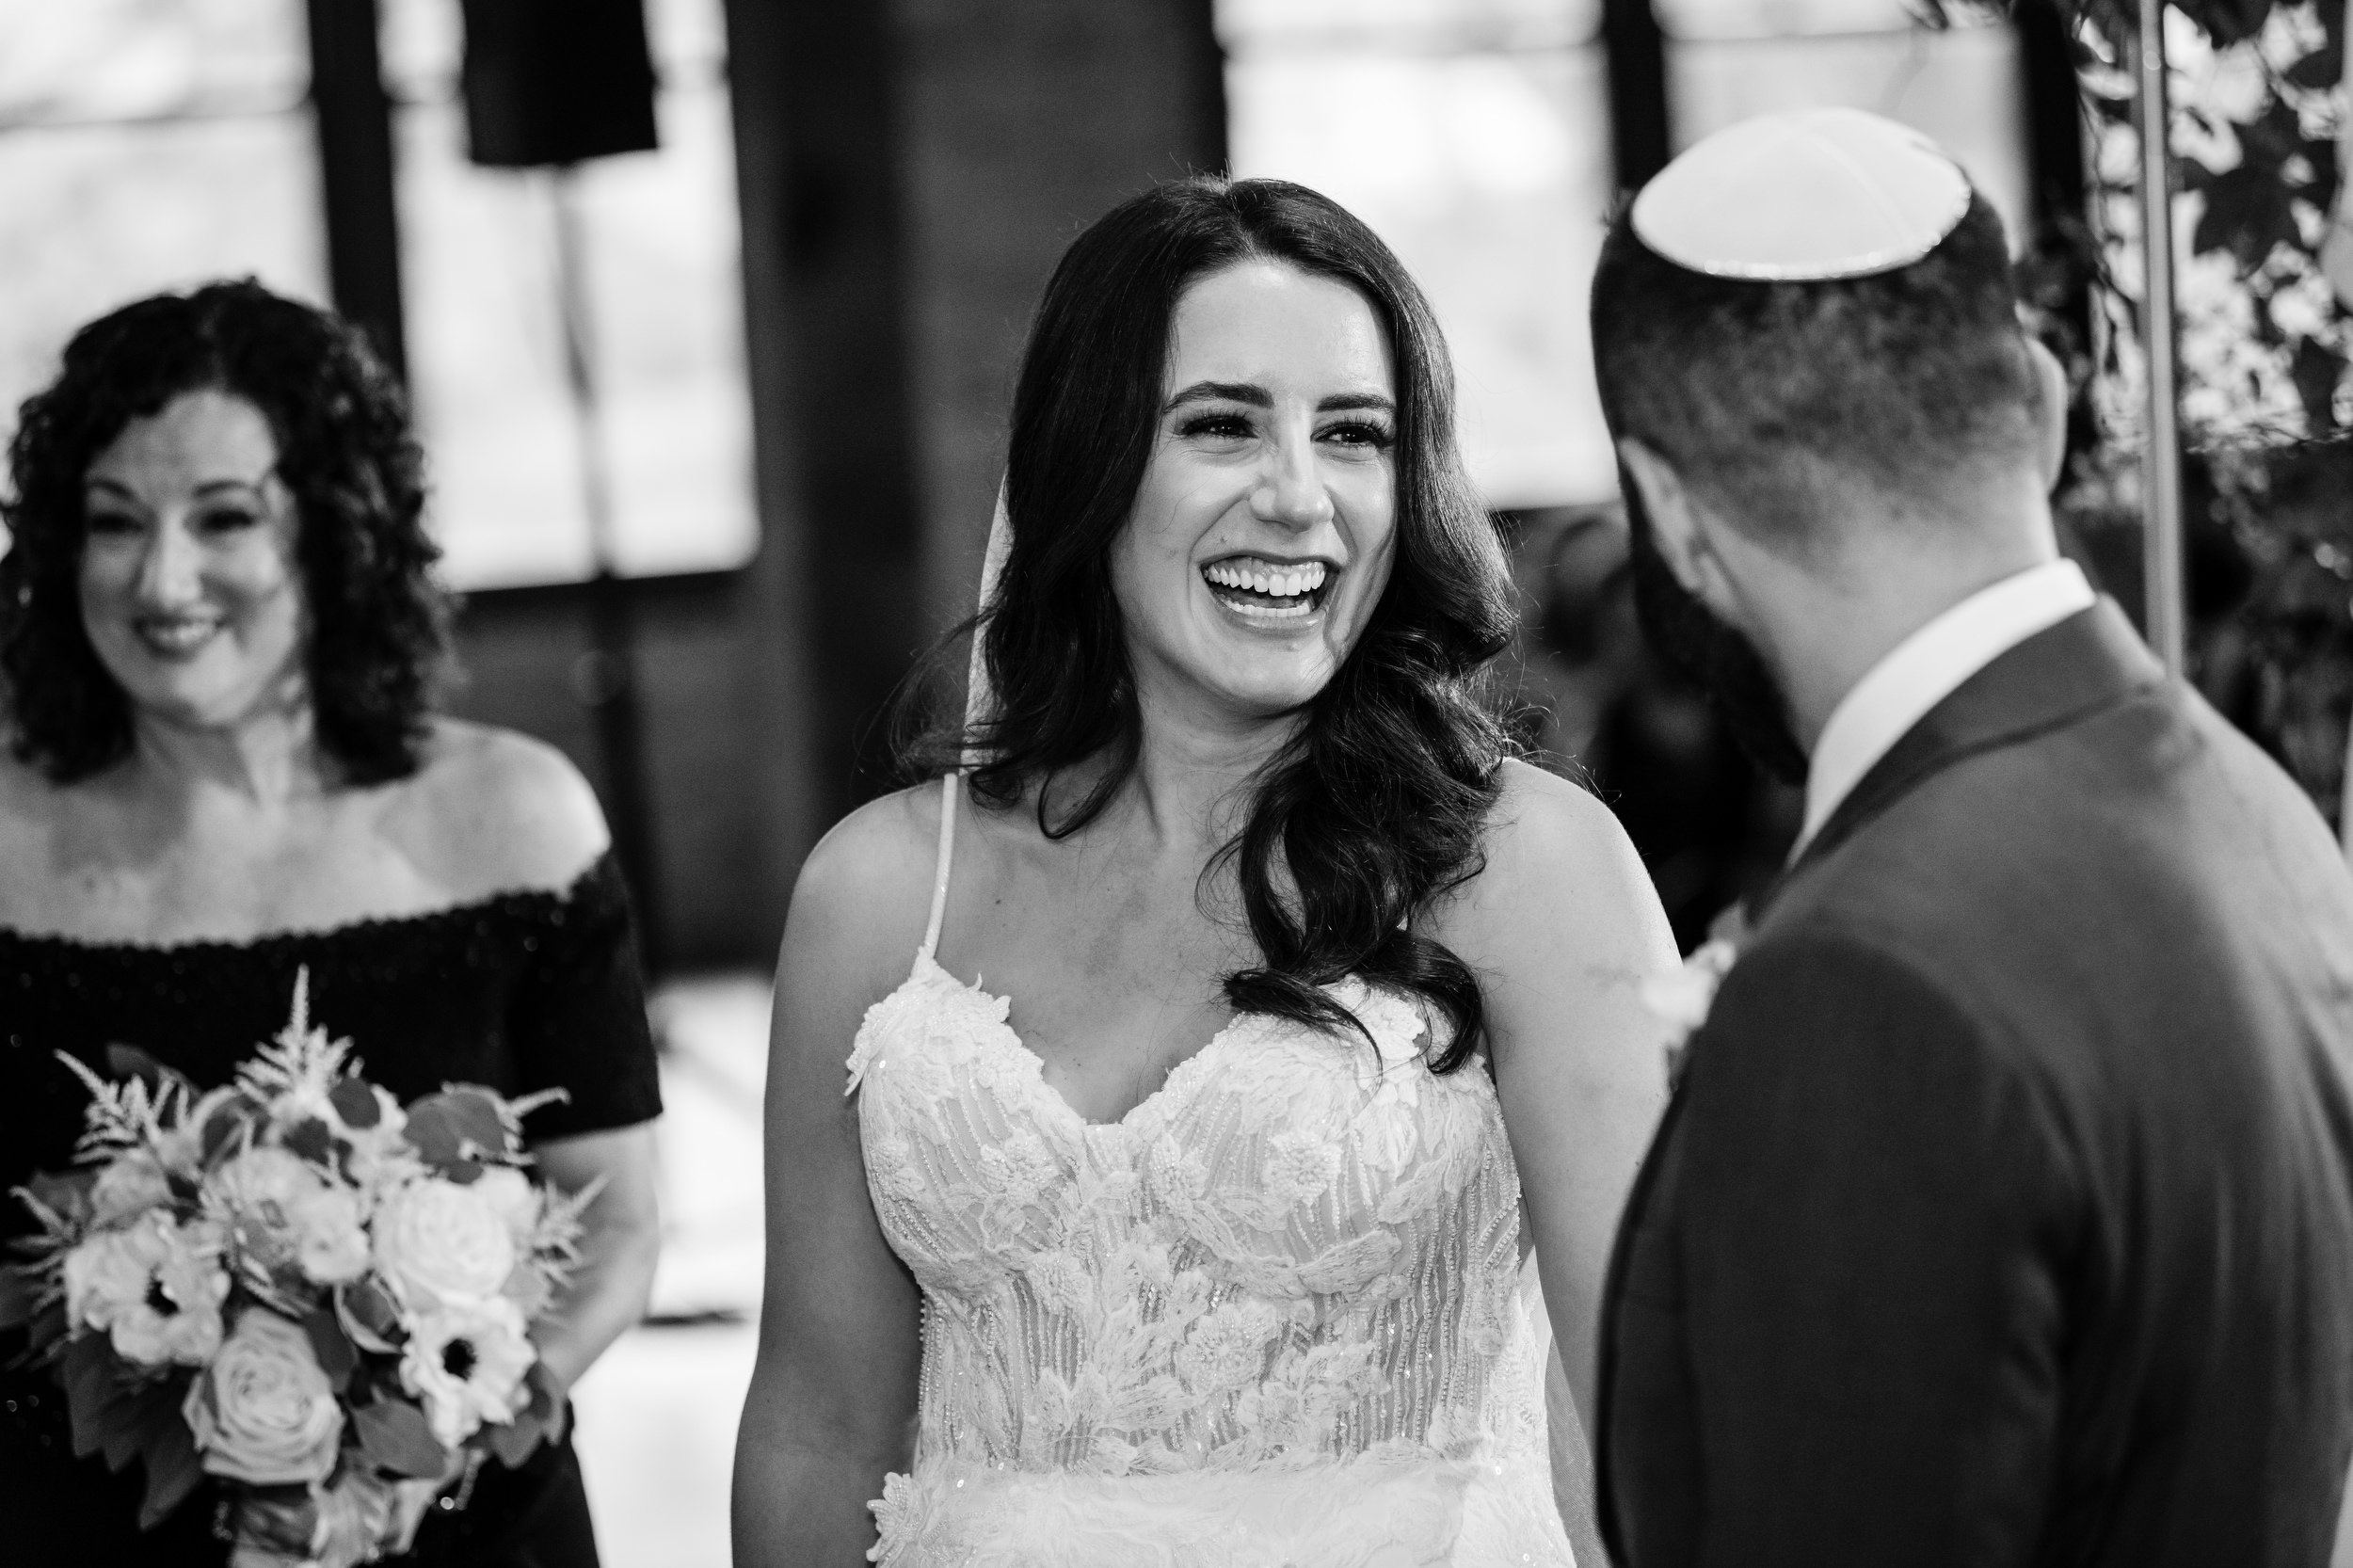 Artifact Events | Indoor Jewish Wedding Ceremony | Chicago IL